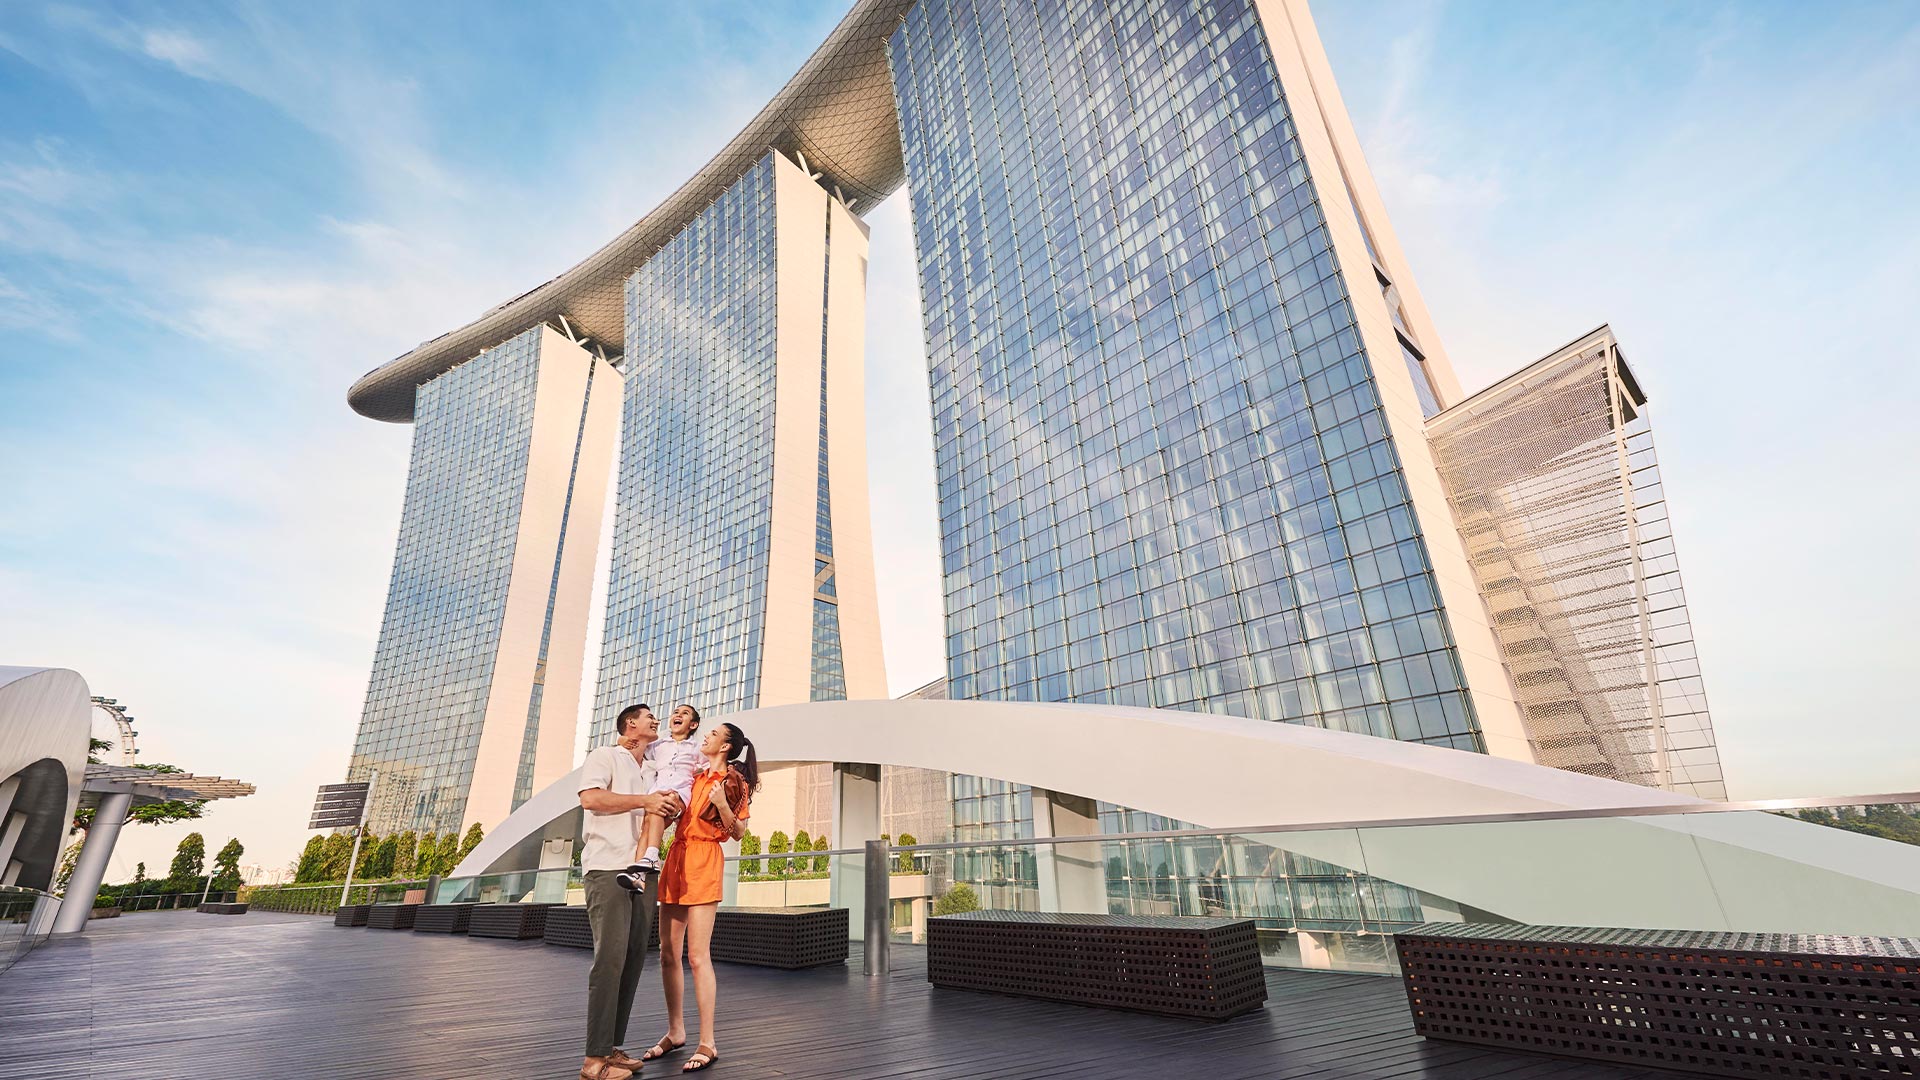 Keluarga sedang menikmati waktu mereka di salah satu hotel ramah anak terbaik di Singapura, Marina Bay Sands